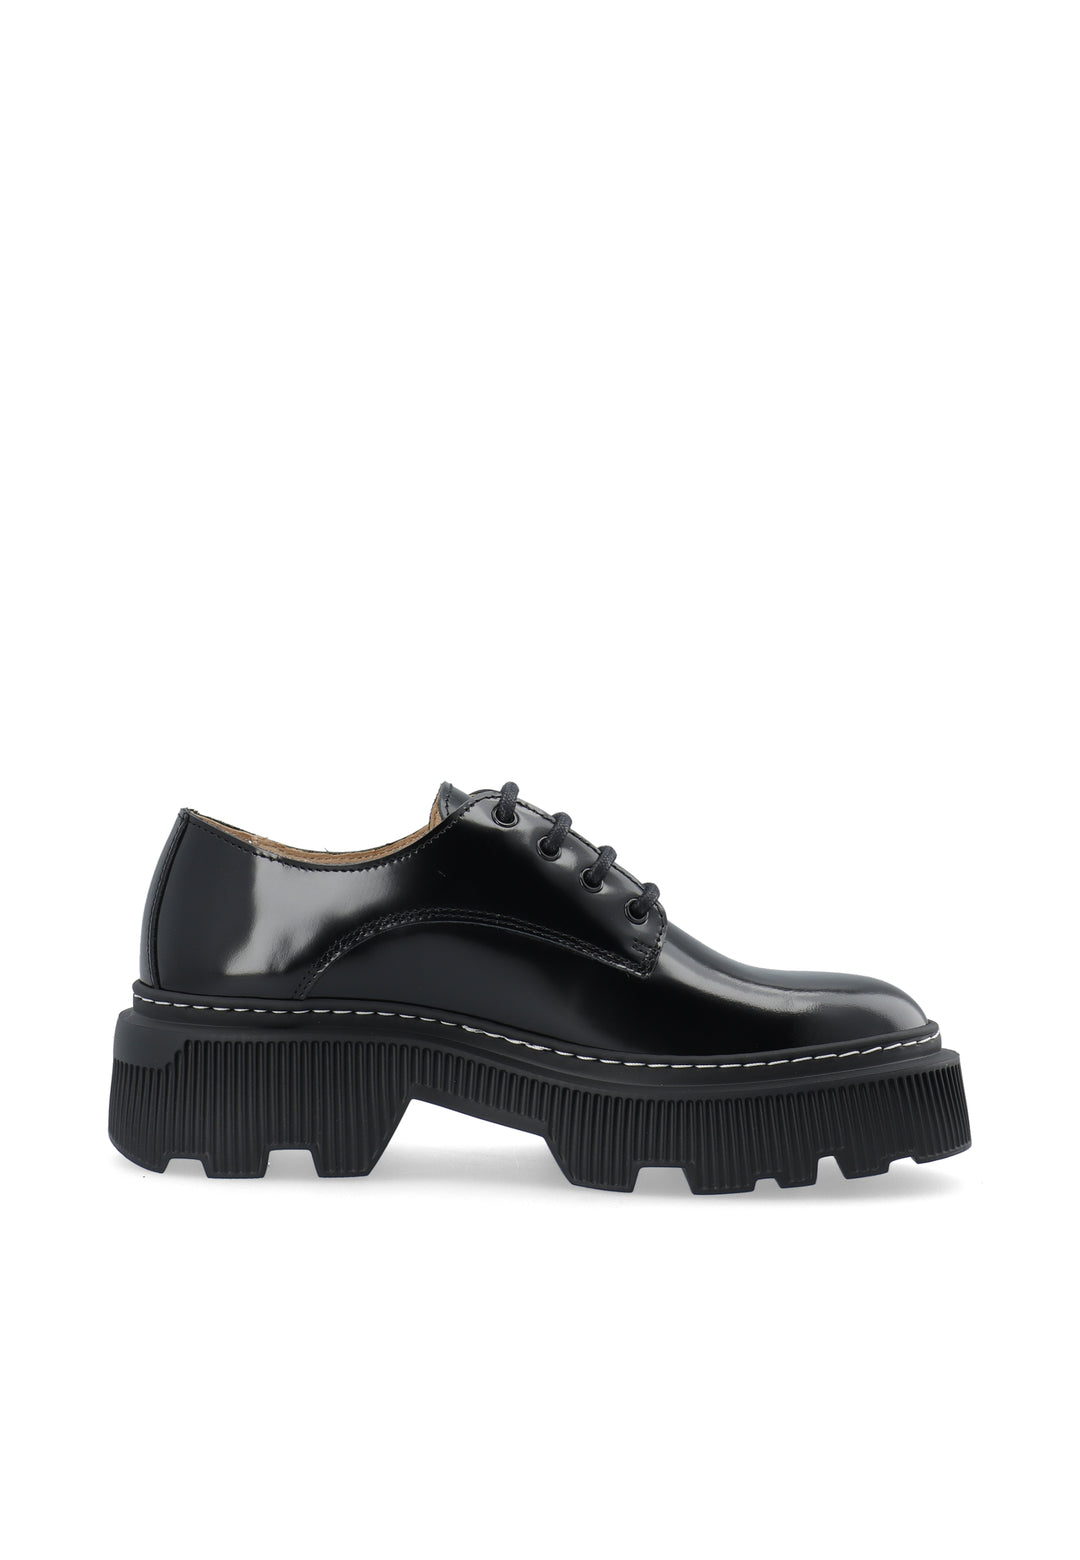 LÄST Maryl - Polido Leather - Black Shoes Black